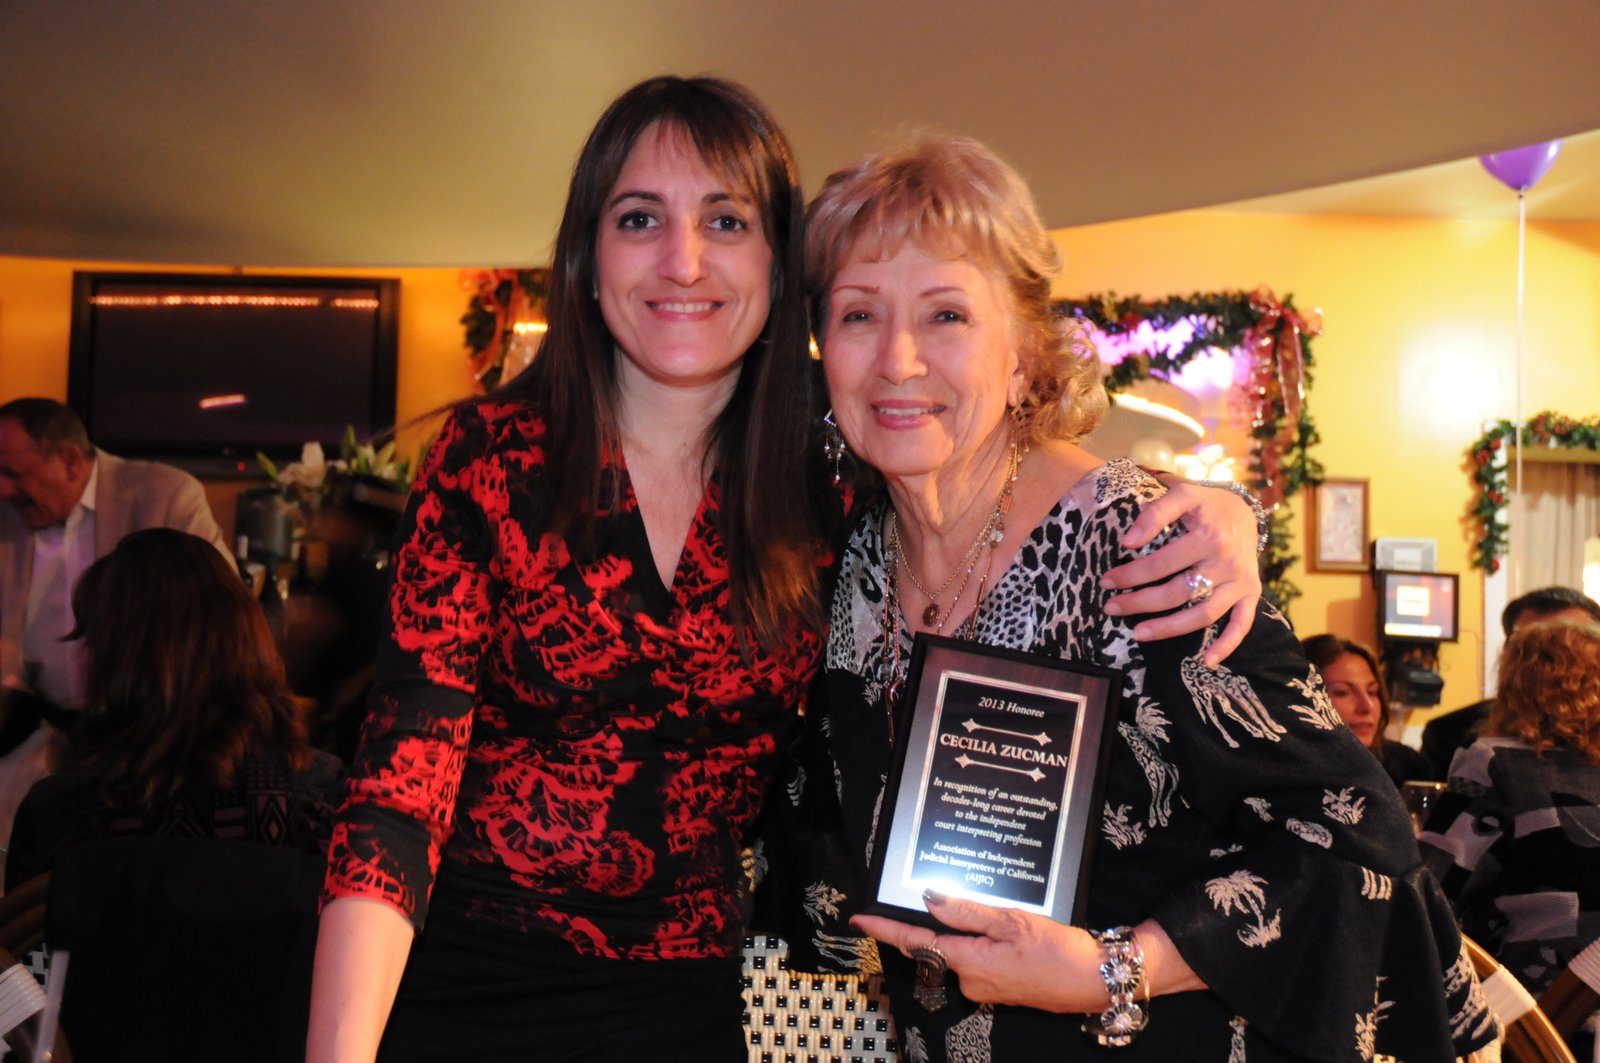 Mom receiving her lifetime achievement award from the new Interpreter's Association